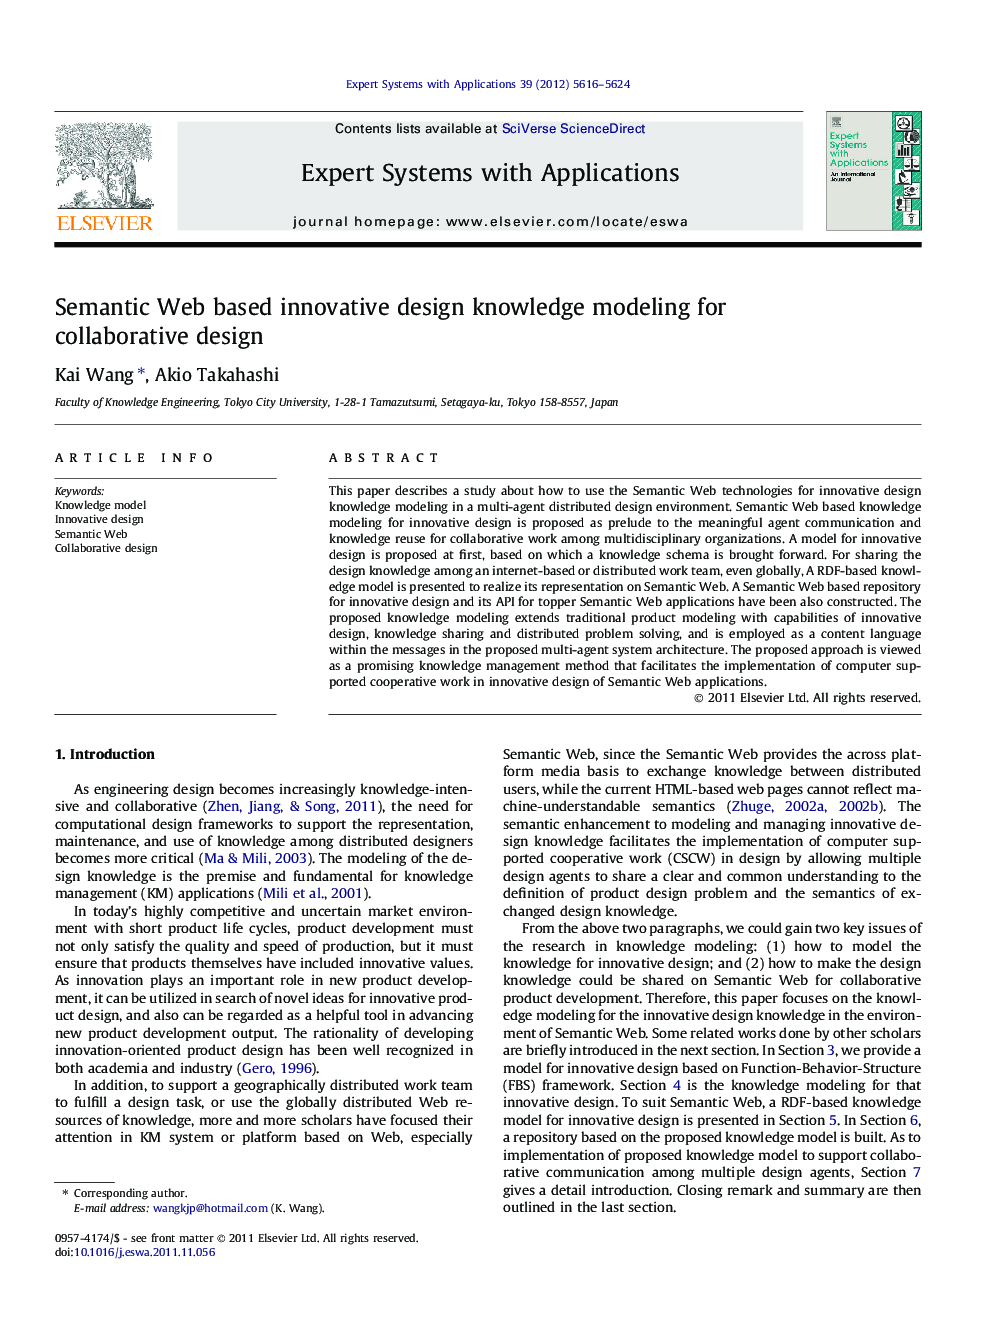 Semantic Web based innovative design knowledge modeling for collaborative design